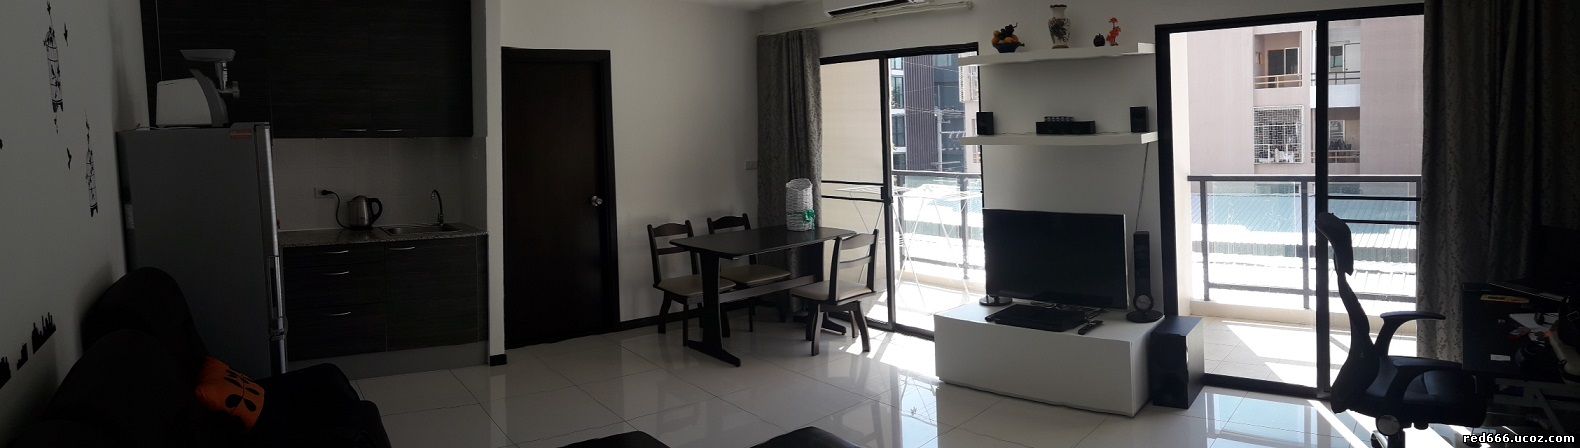 Продам 3-х комнатную квартиру в Таиланде в Паттайе